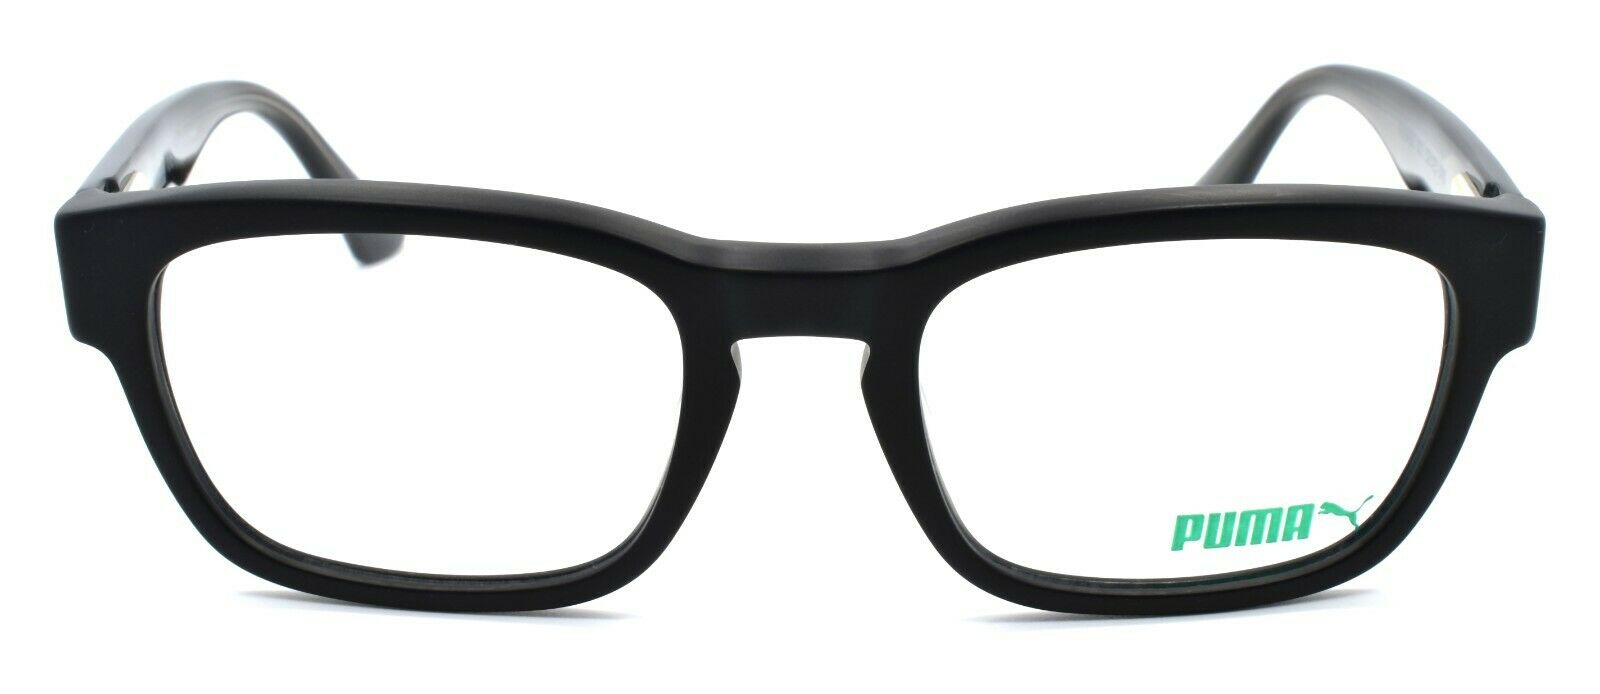 2-PUMA PU0045O 001 Men's Eyeglasses Frames 52-21-140 Black / Gray-889652015408-IKSpecs